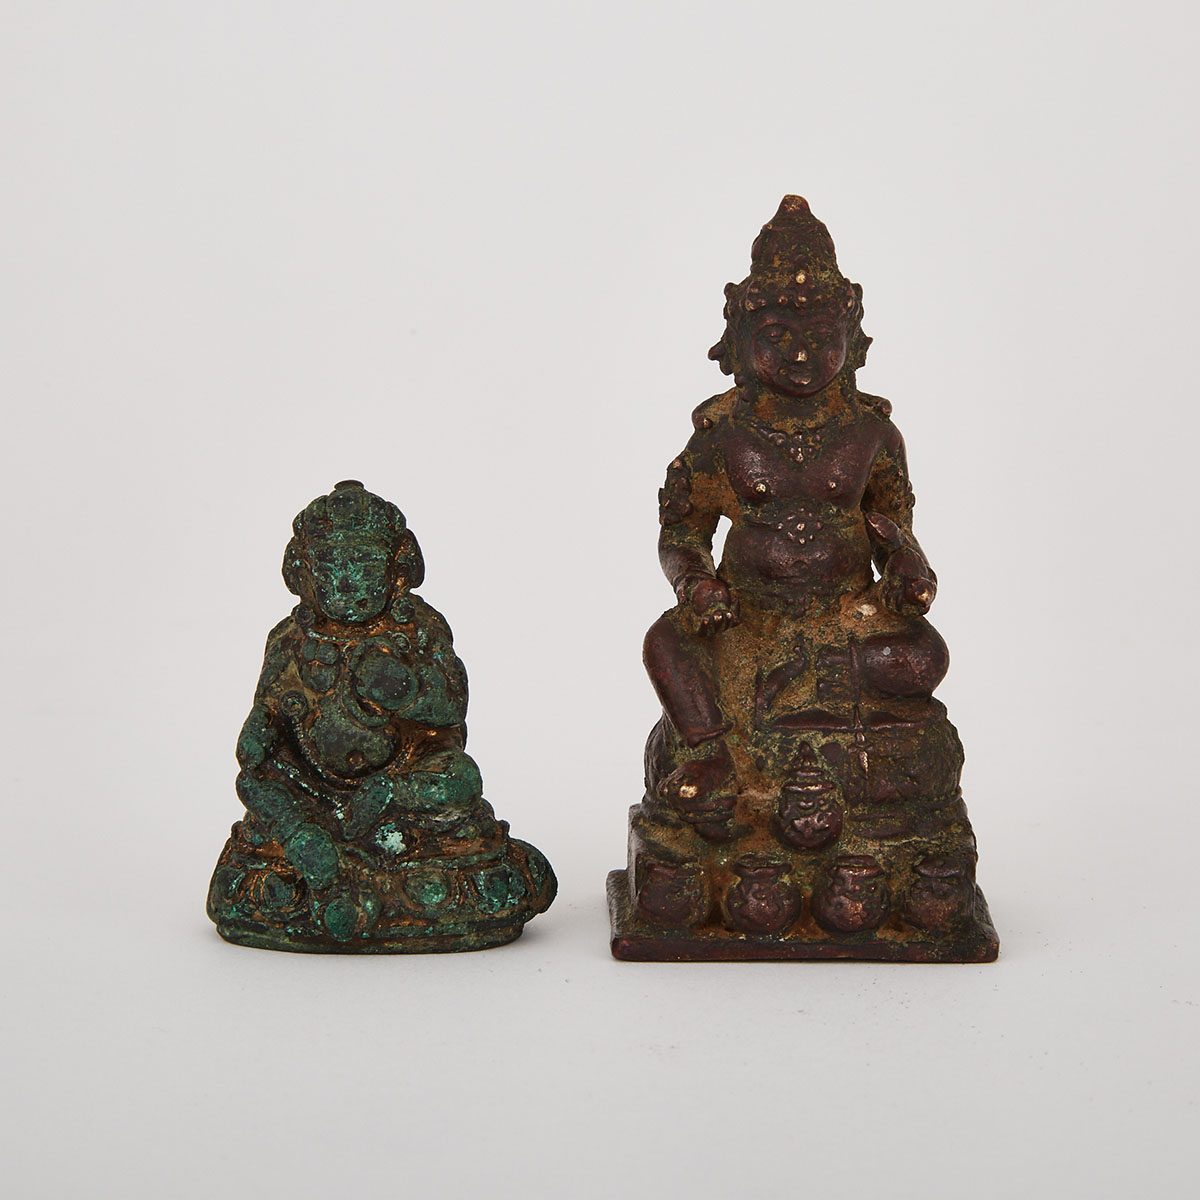 Two Miniature Tibetan Bronzes, 15th Century or Later